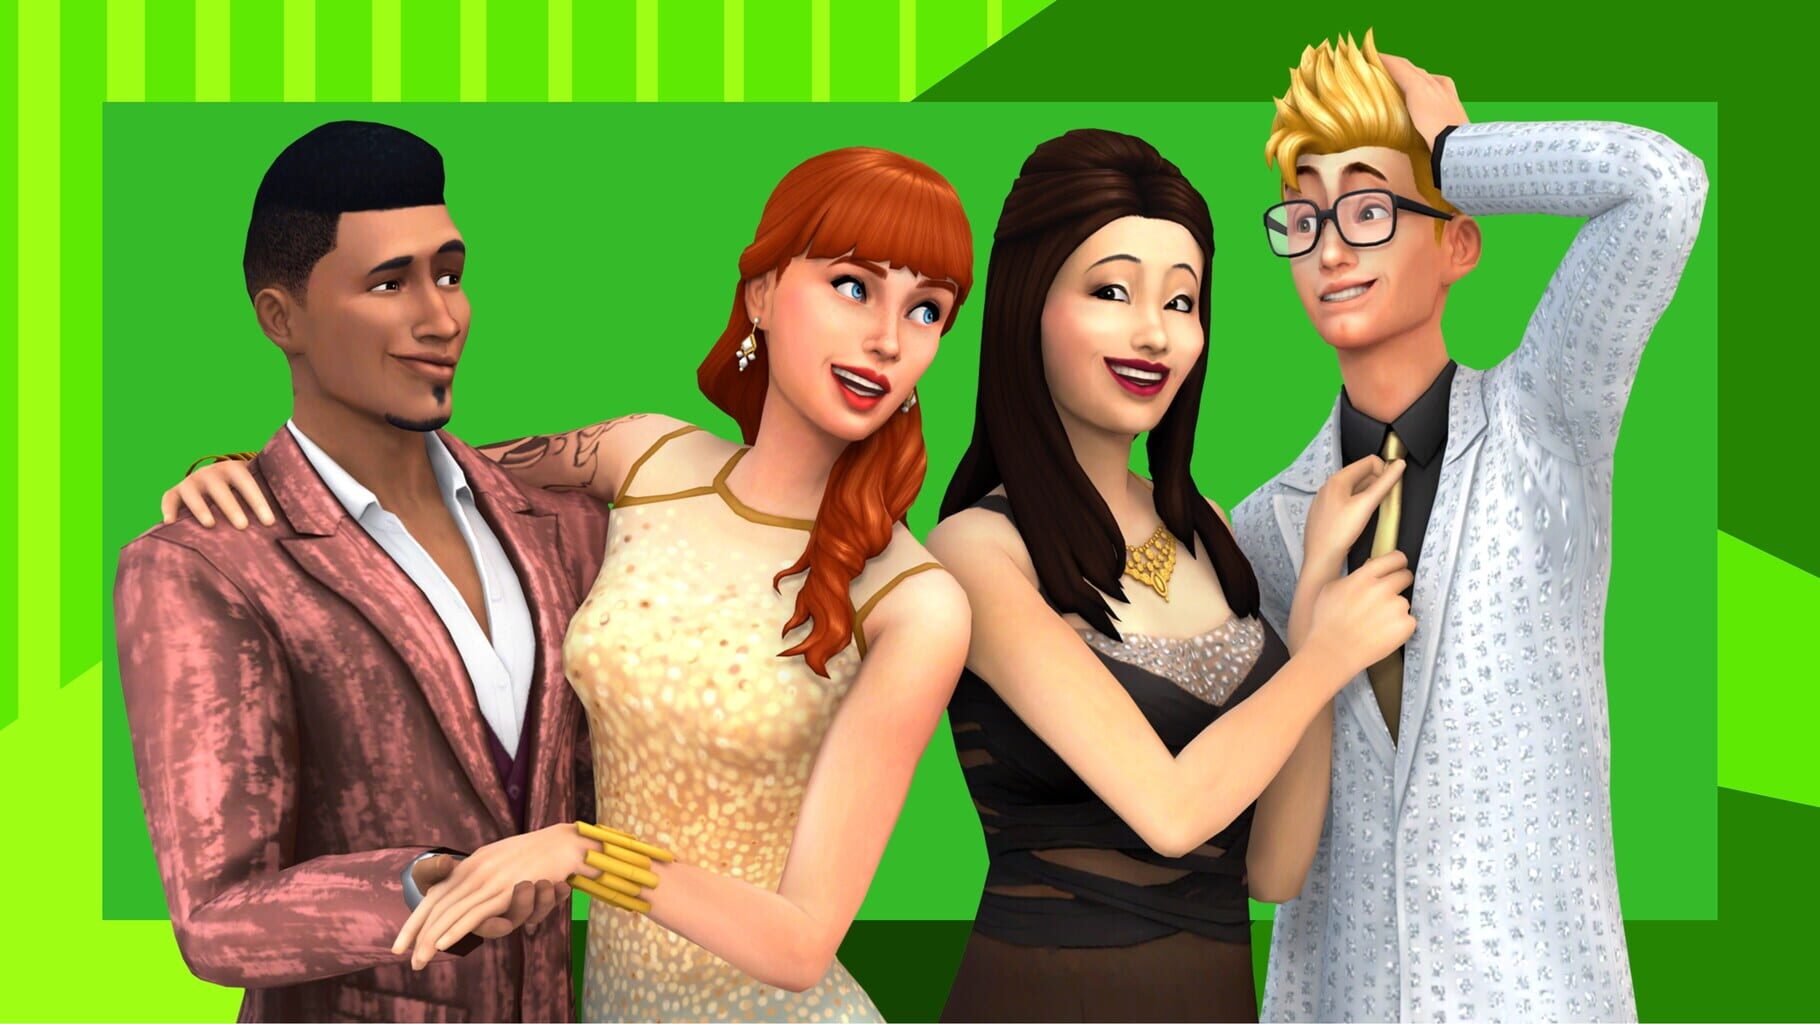 Arte - The Sims 4: Luxury Party Stuff